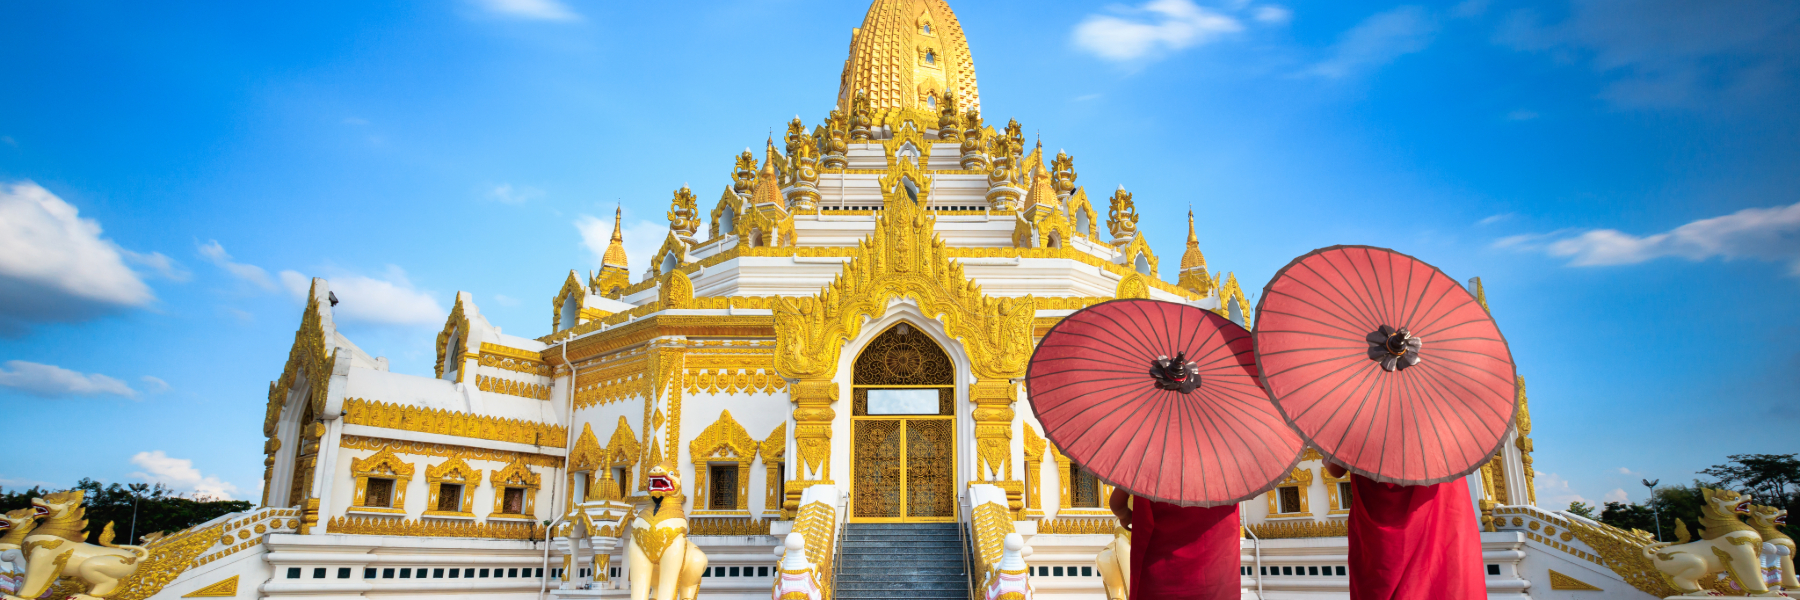 Temple and two monks in Yangon, Myanmar, Shutterstock